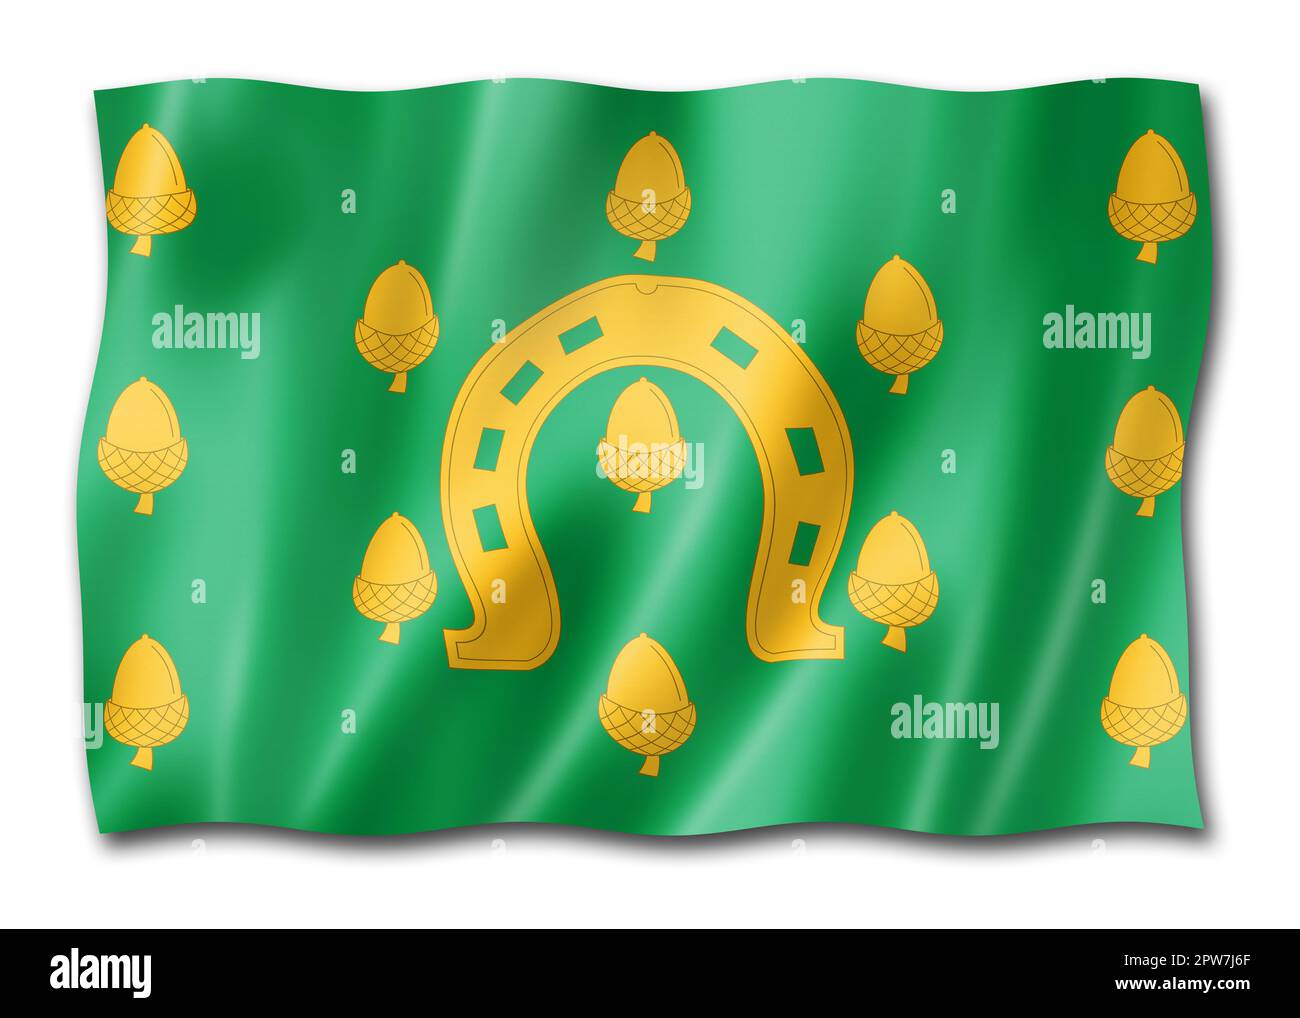 Rutland County flag, United Kingdom waving banner collection. 3D illustration Stock Photo